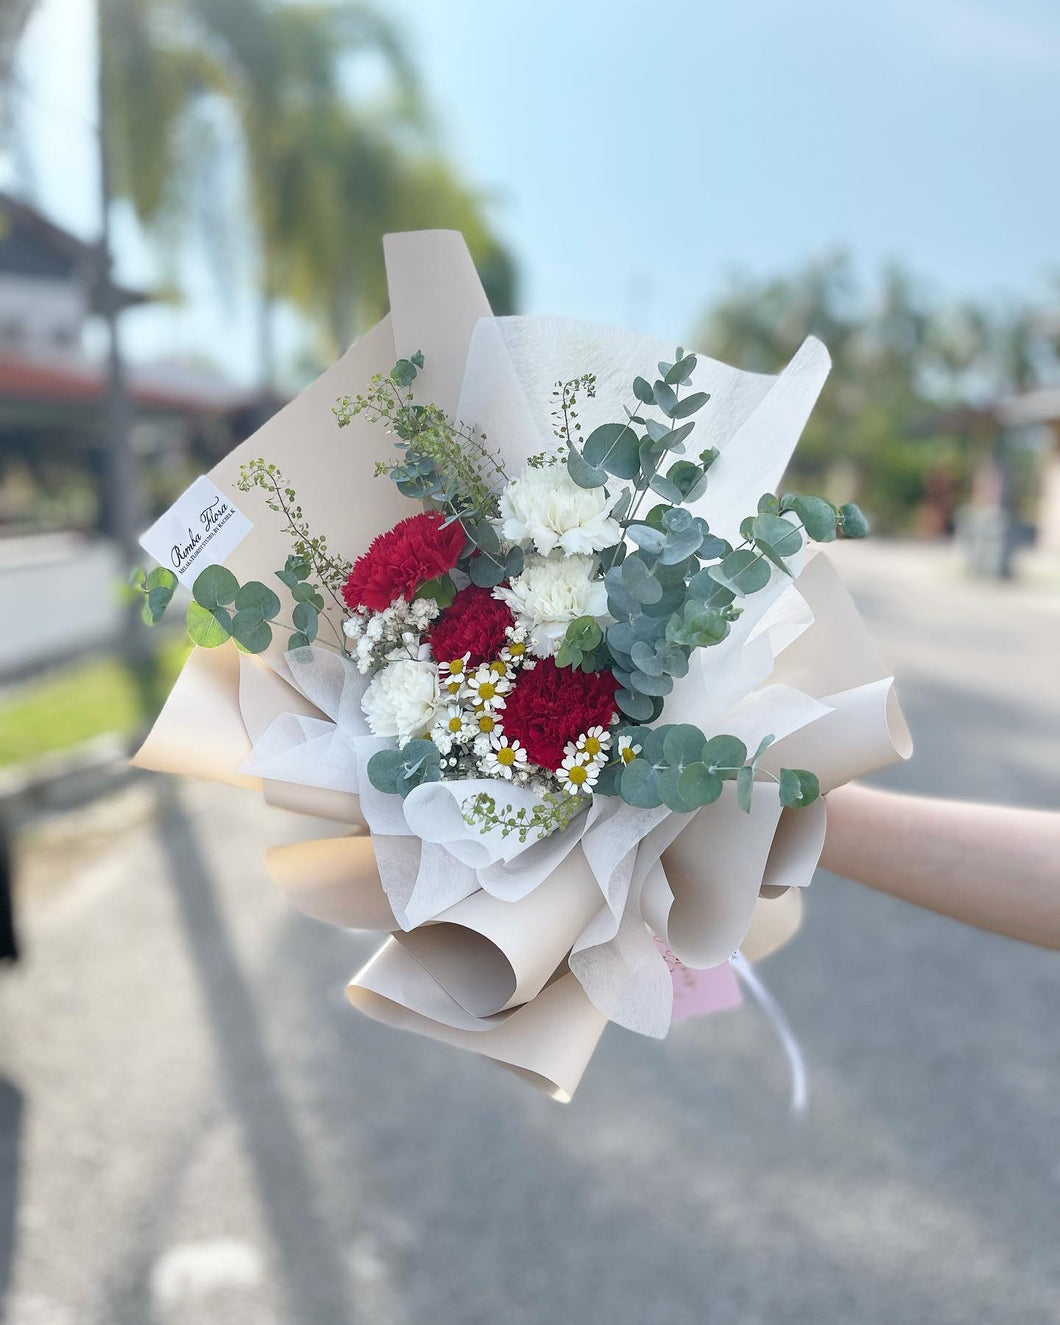 Prestige Wrap Bouquet To You ( Deep Red Carnation Design)